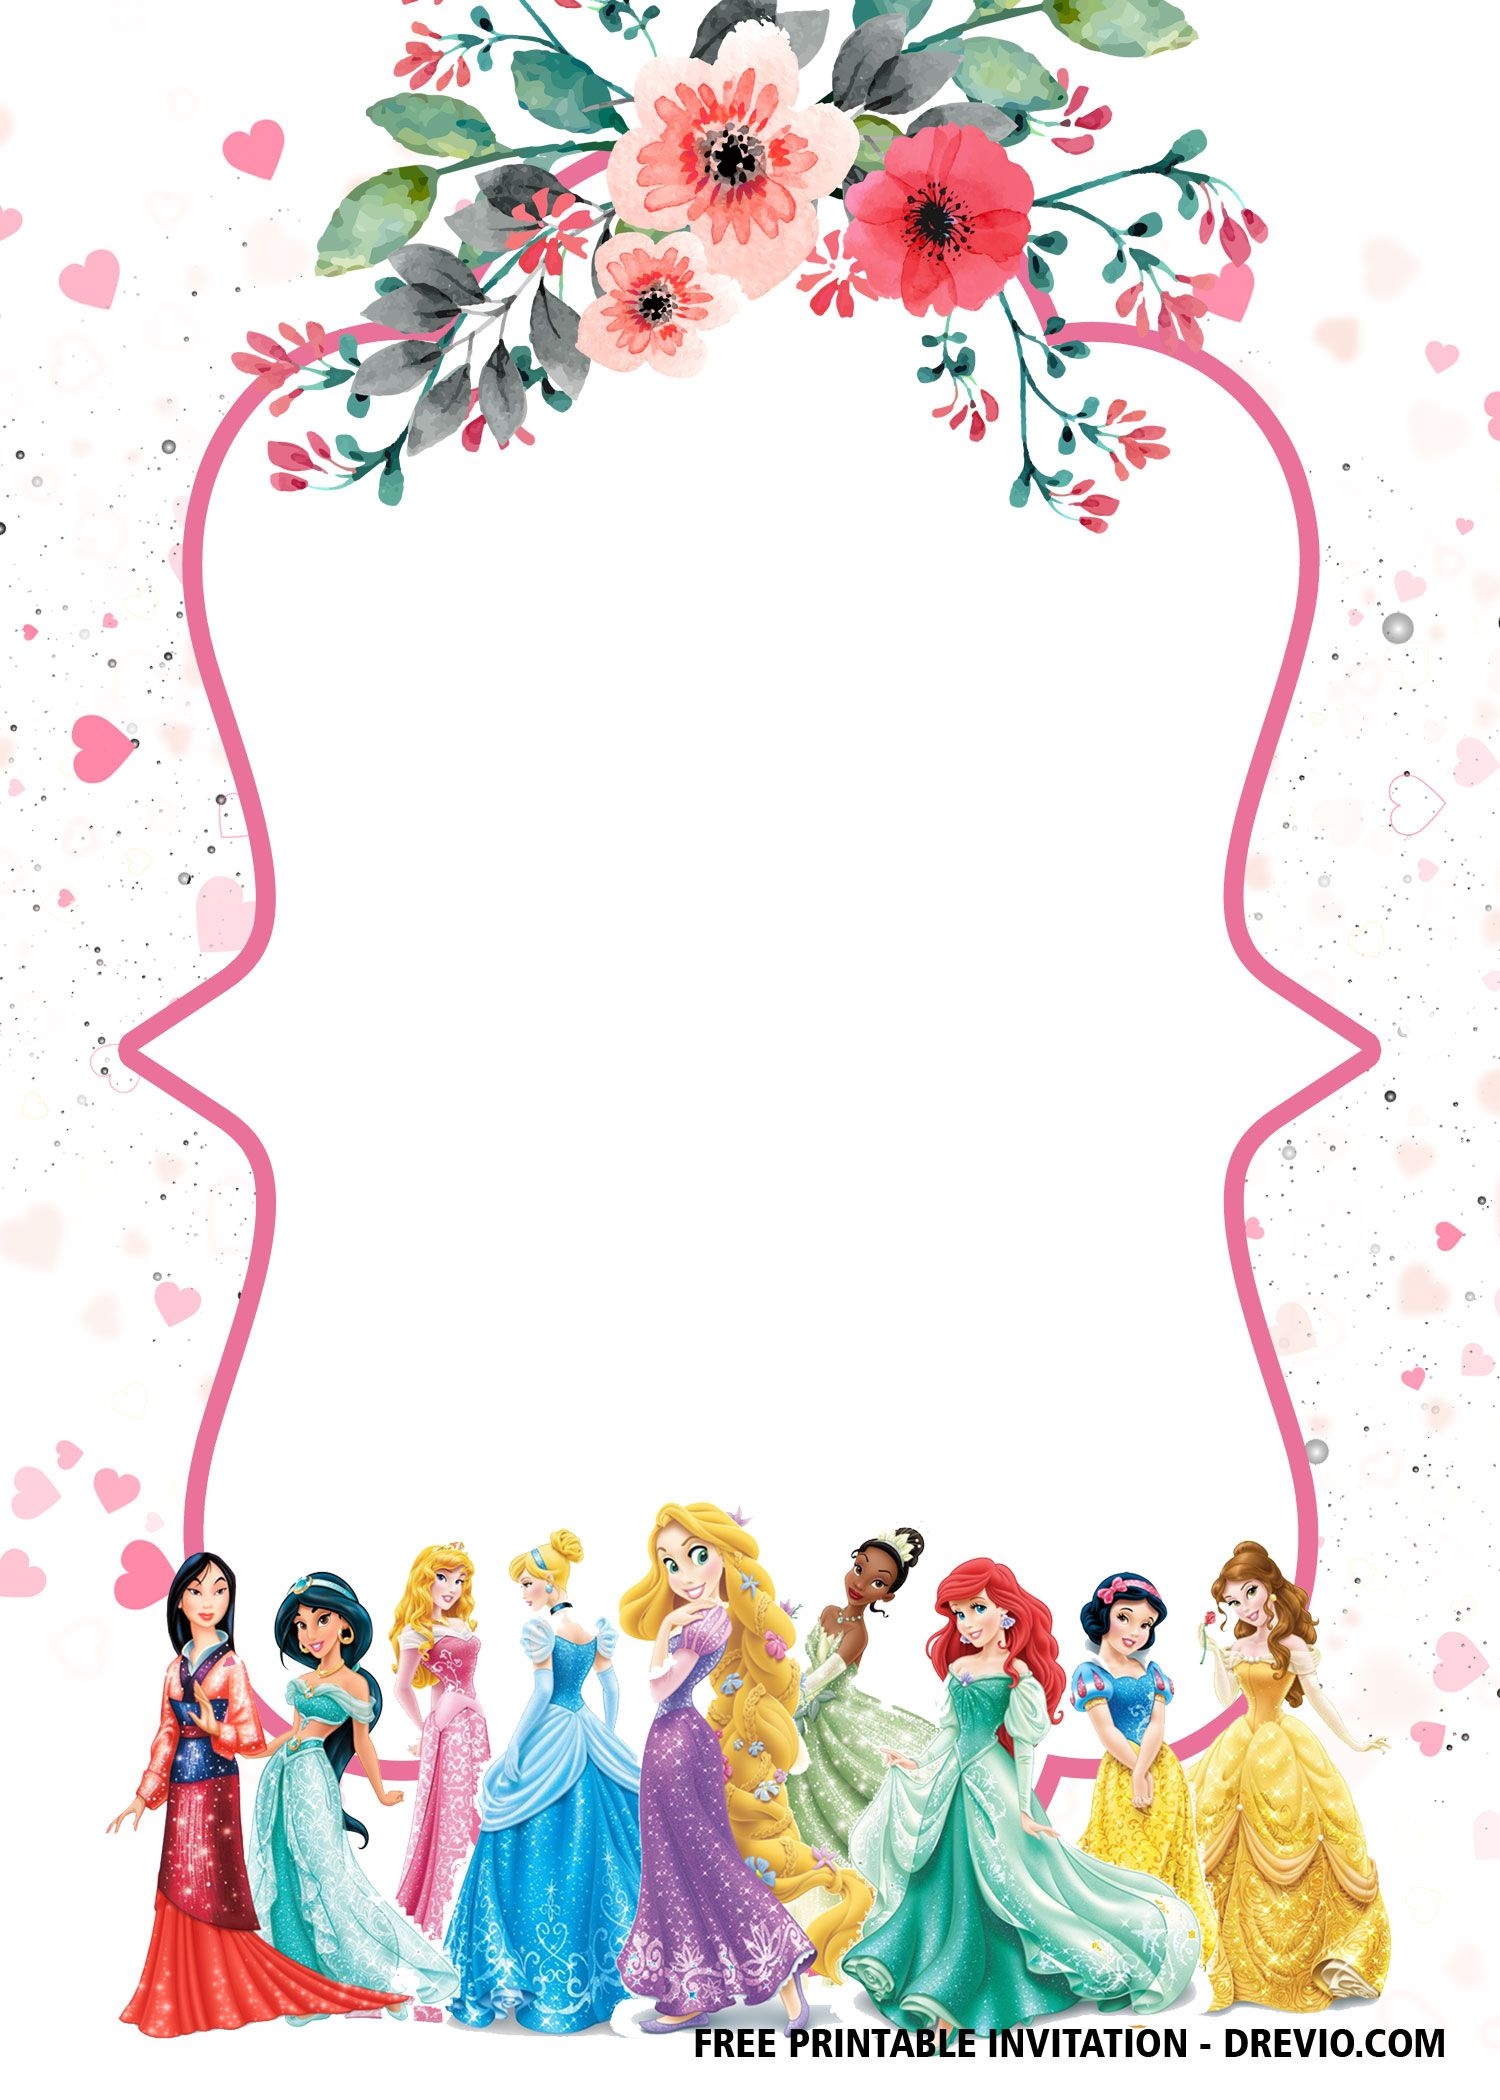 Pin On Free Printable Birthday Invitation - Disney Princess Free Printable Invitations